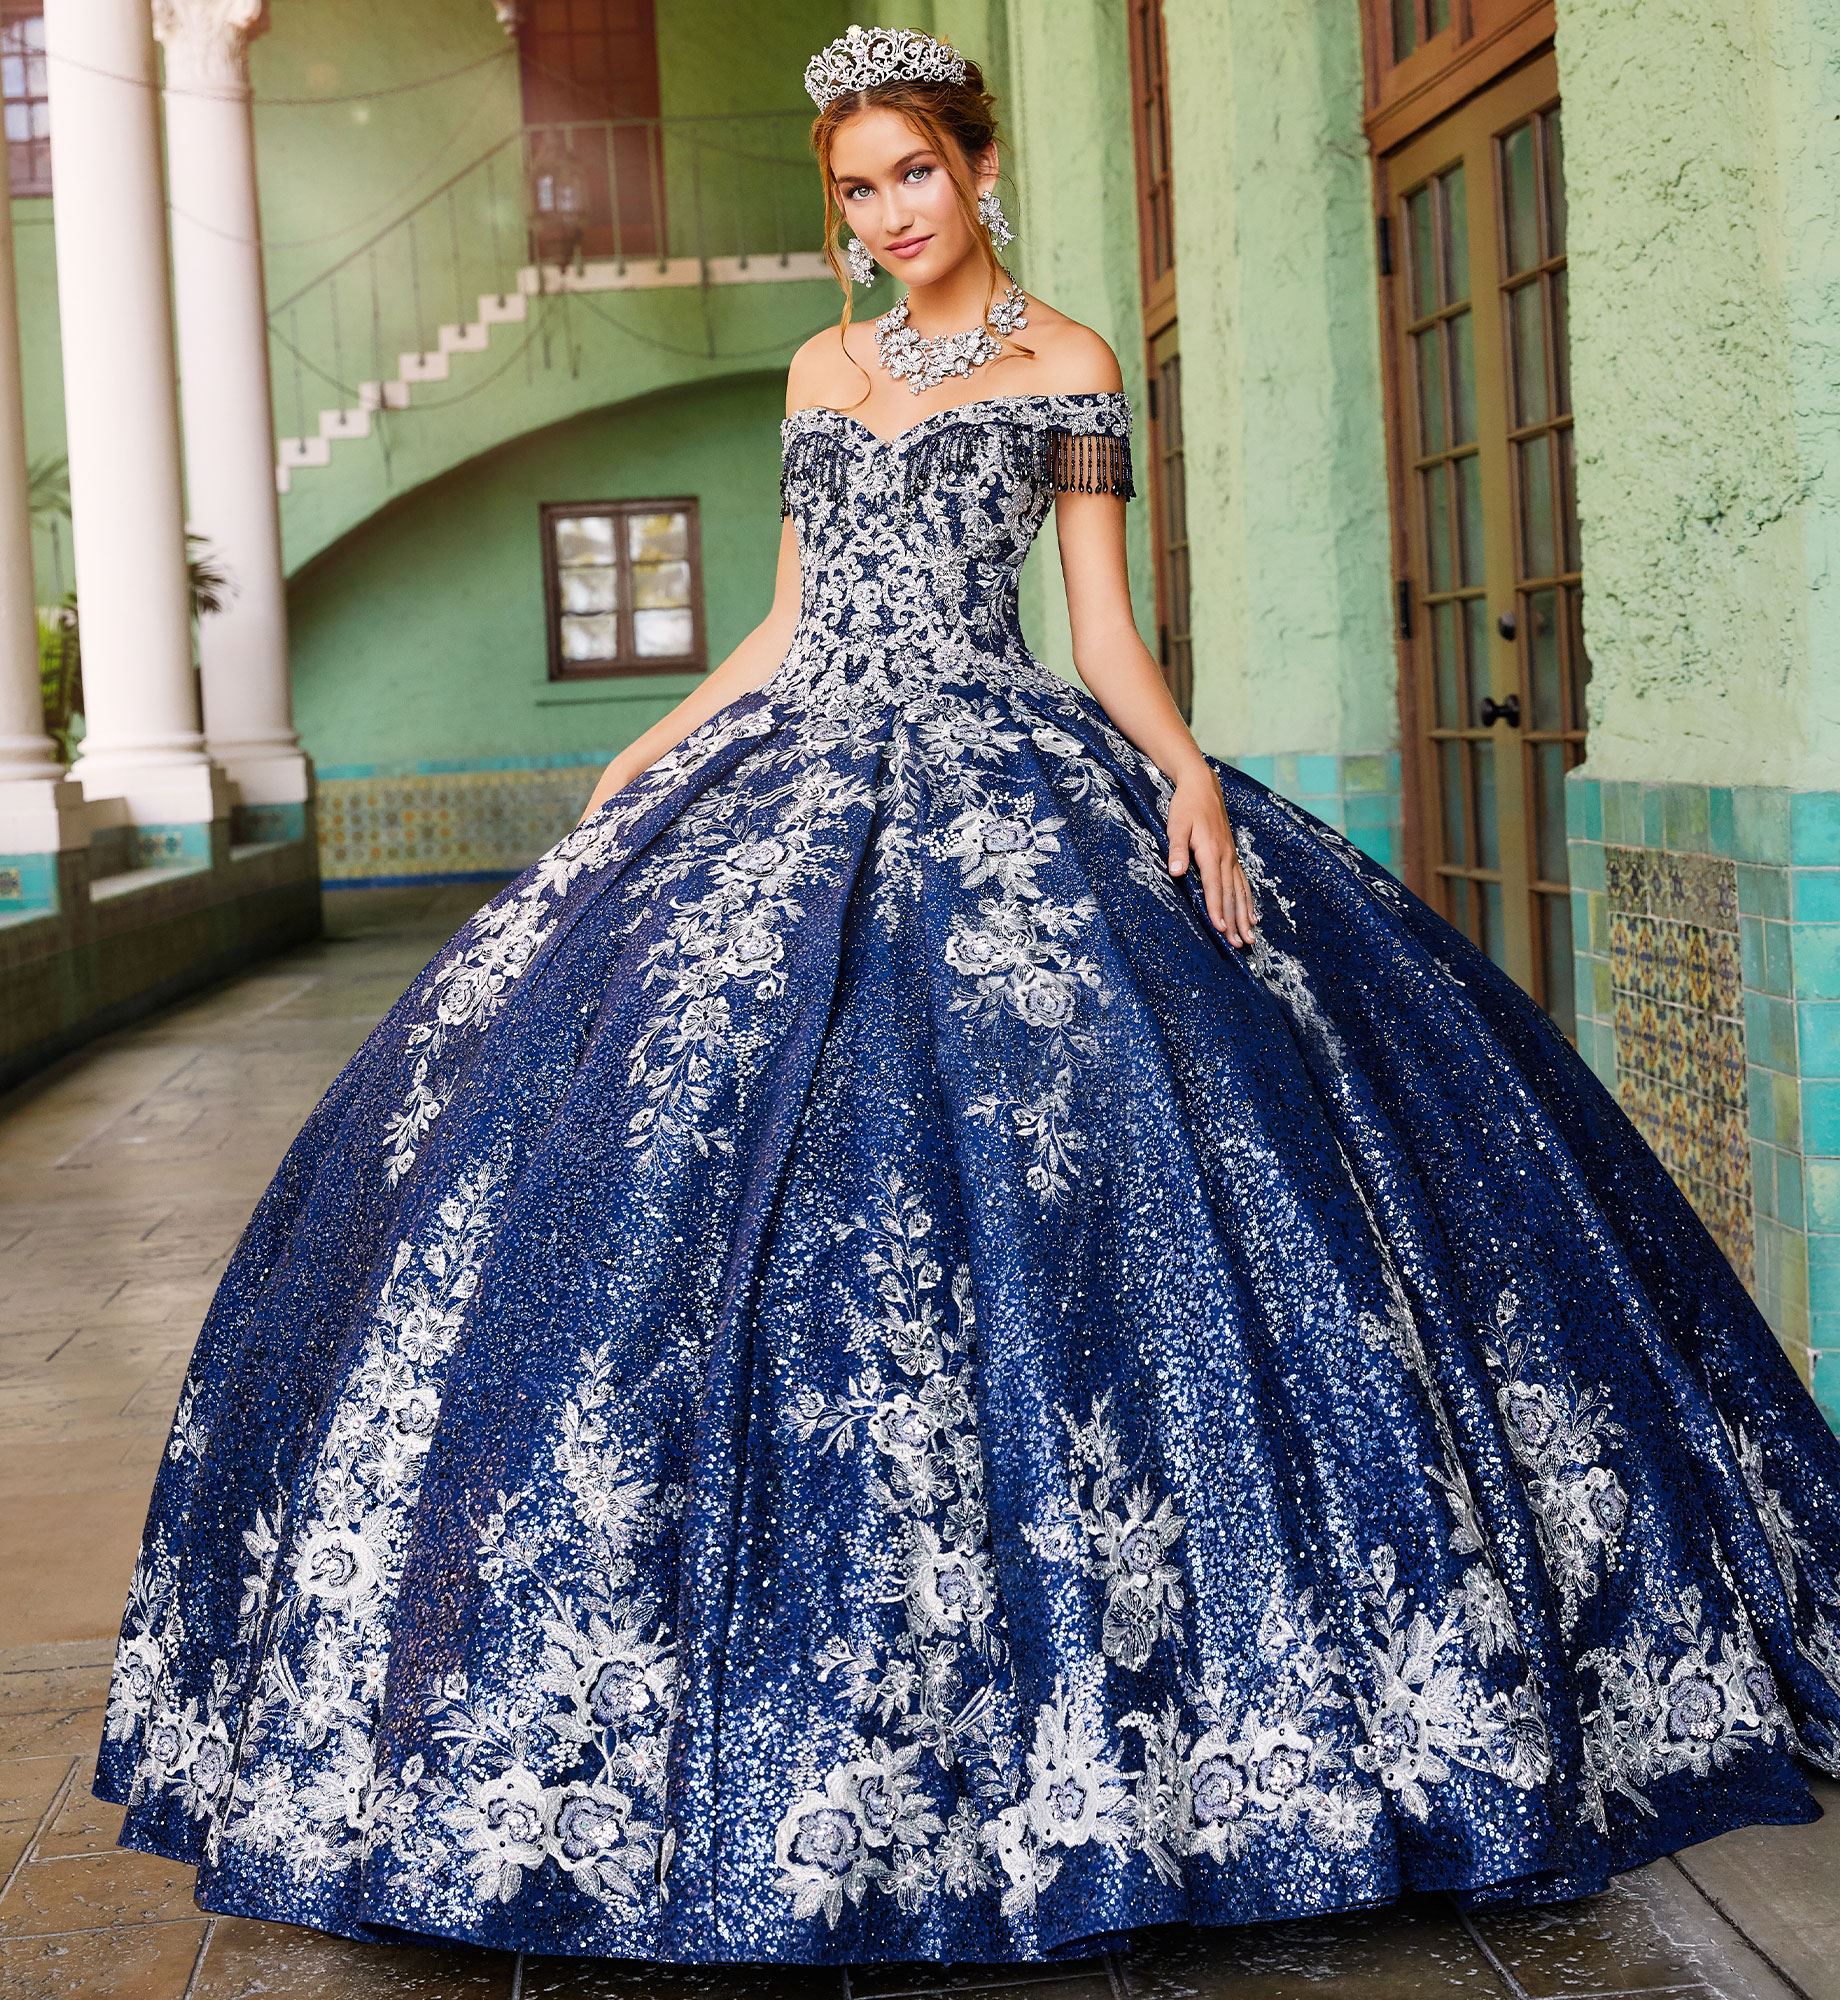 Brunette model in off the shoulder blue and silver quinceañera dress